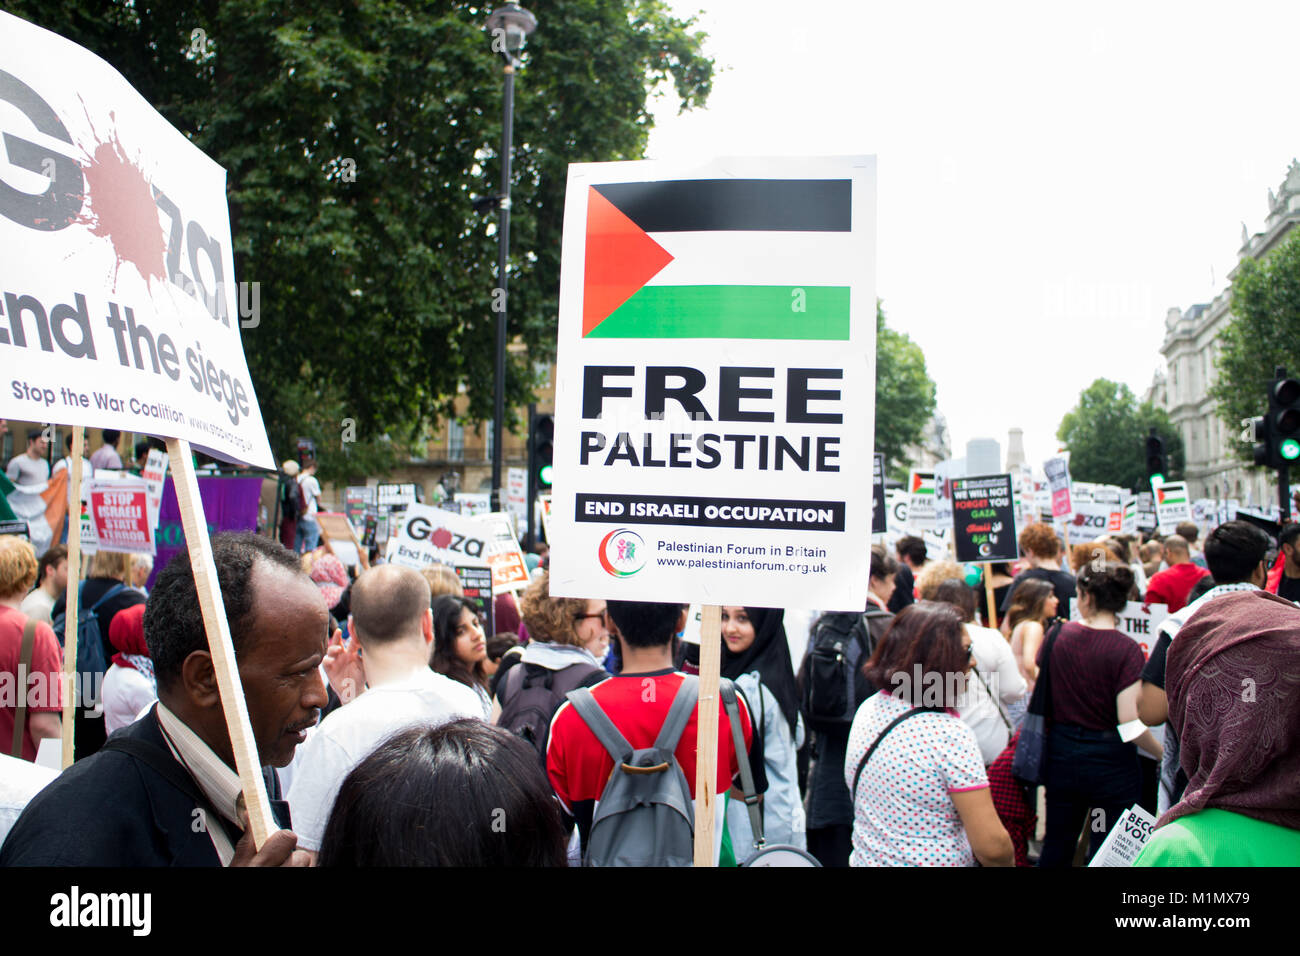 Gaza Demonstration - Free Palestine March Stock Photo